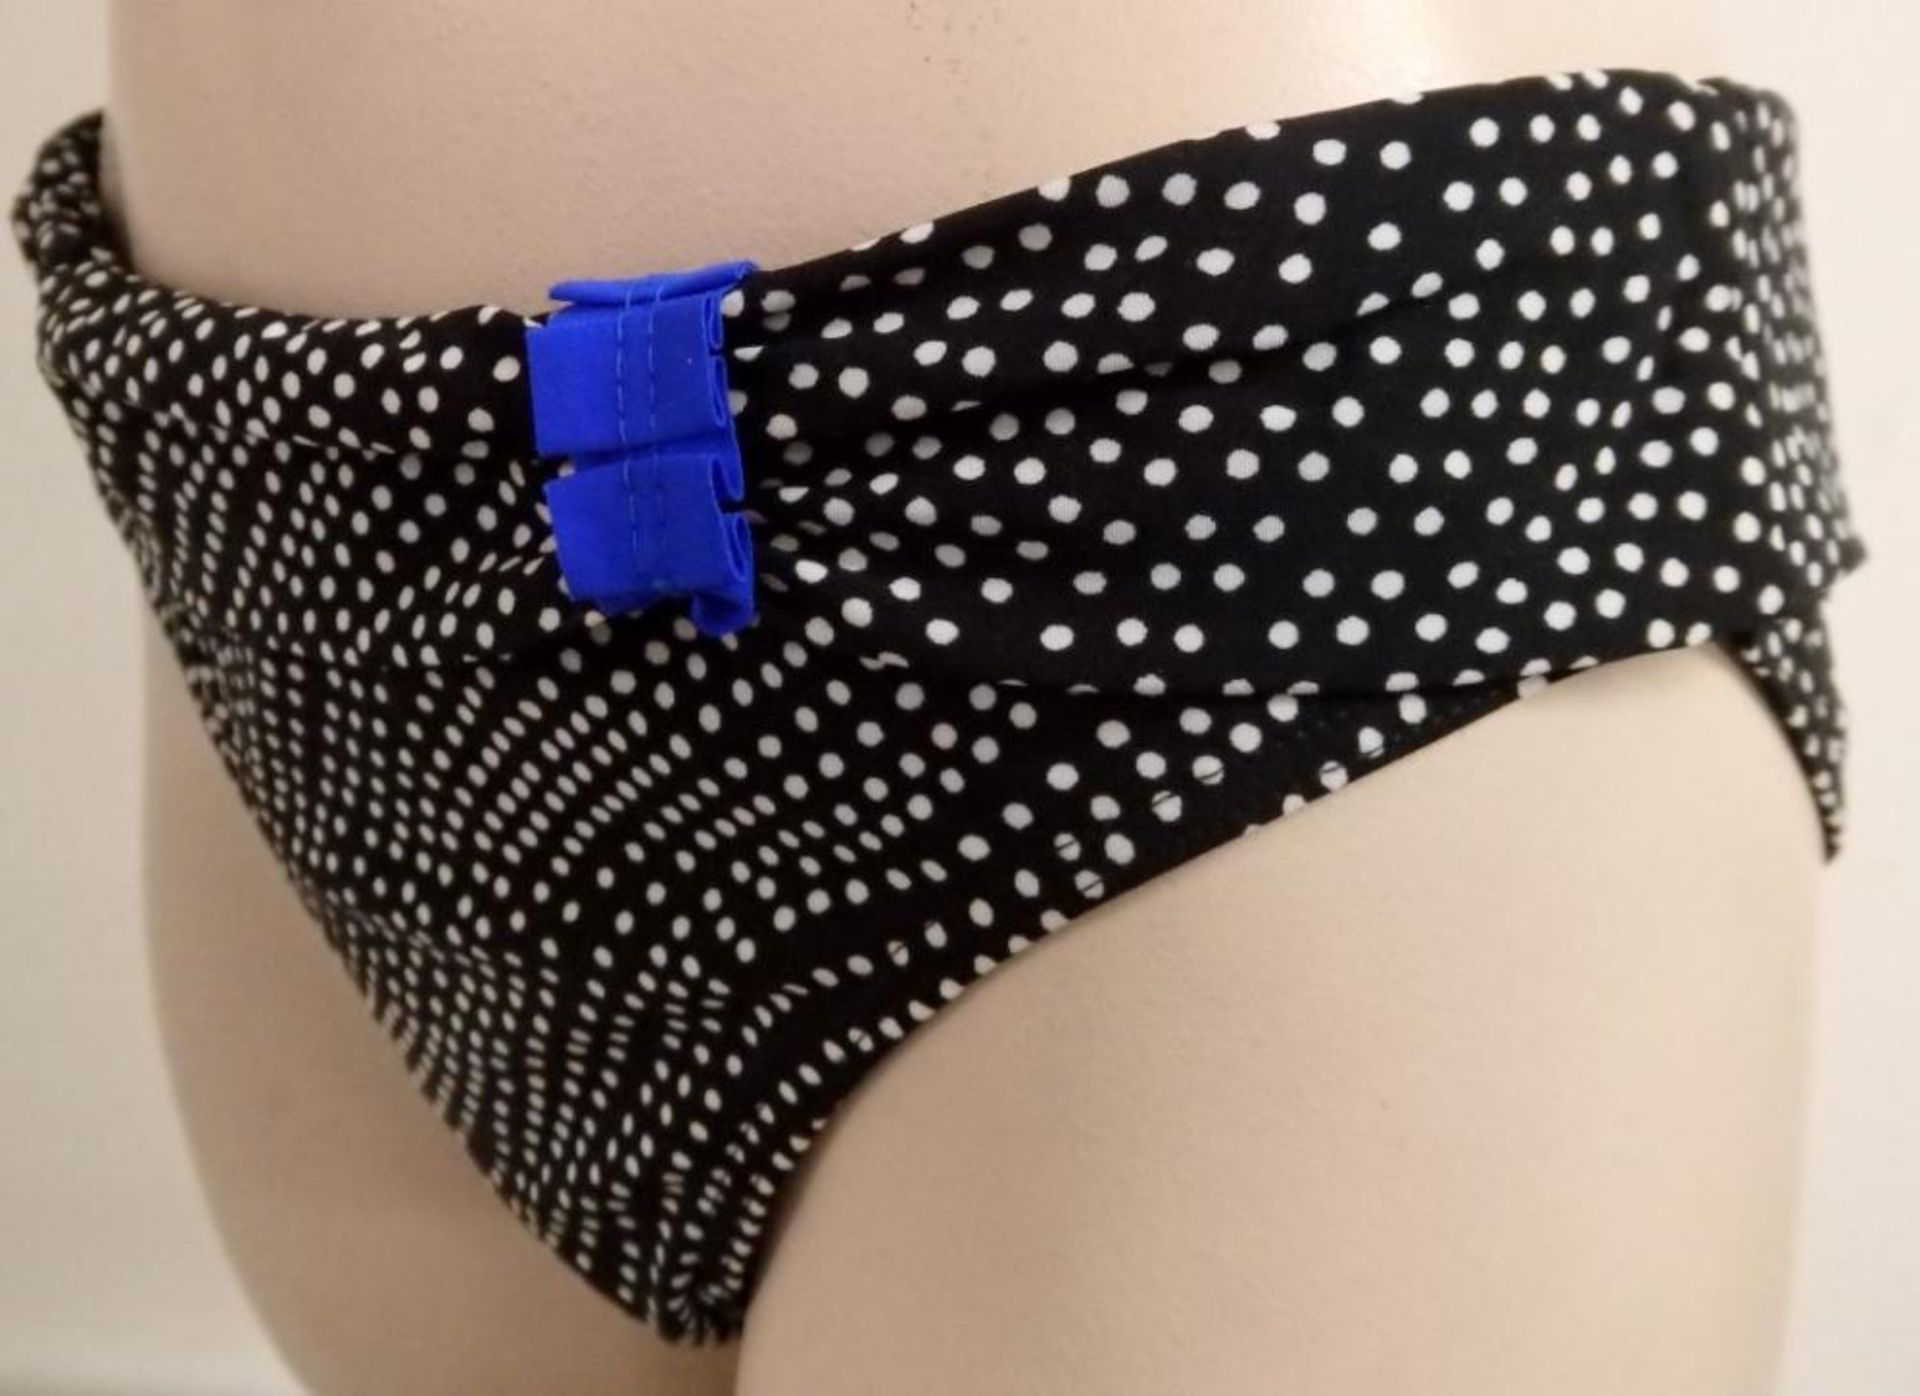 1 x Rasurel - Black Polka dot with royal blue trim &frill Tobago Bikini - B21068 - Size 2C - UK 32 - - Image 4 of 10